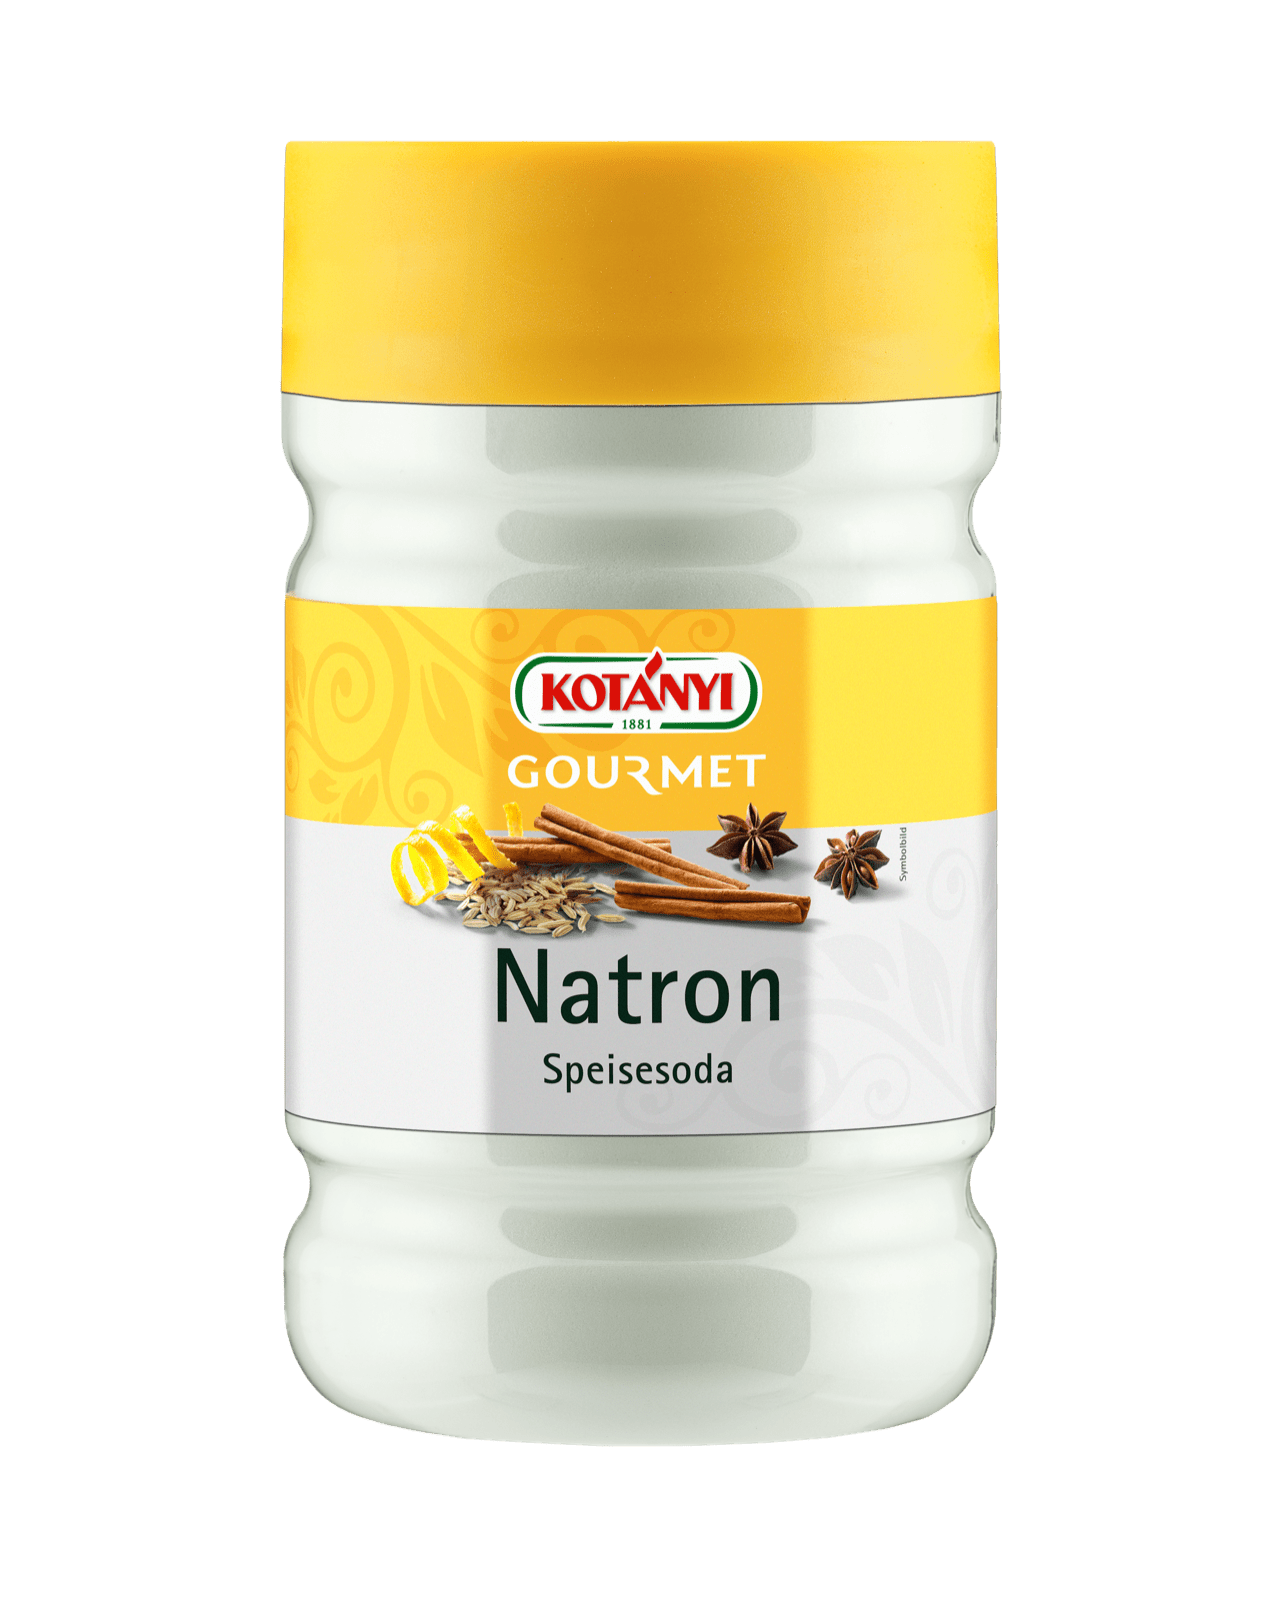 natron is baking soda